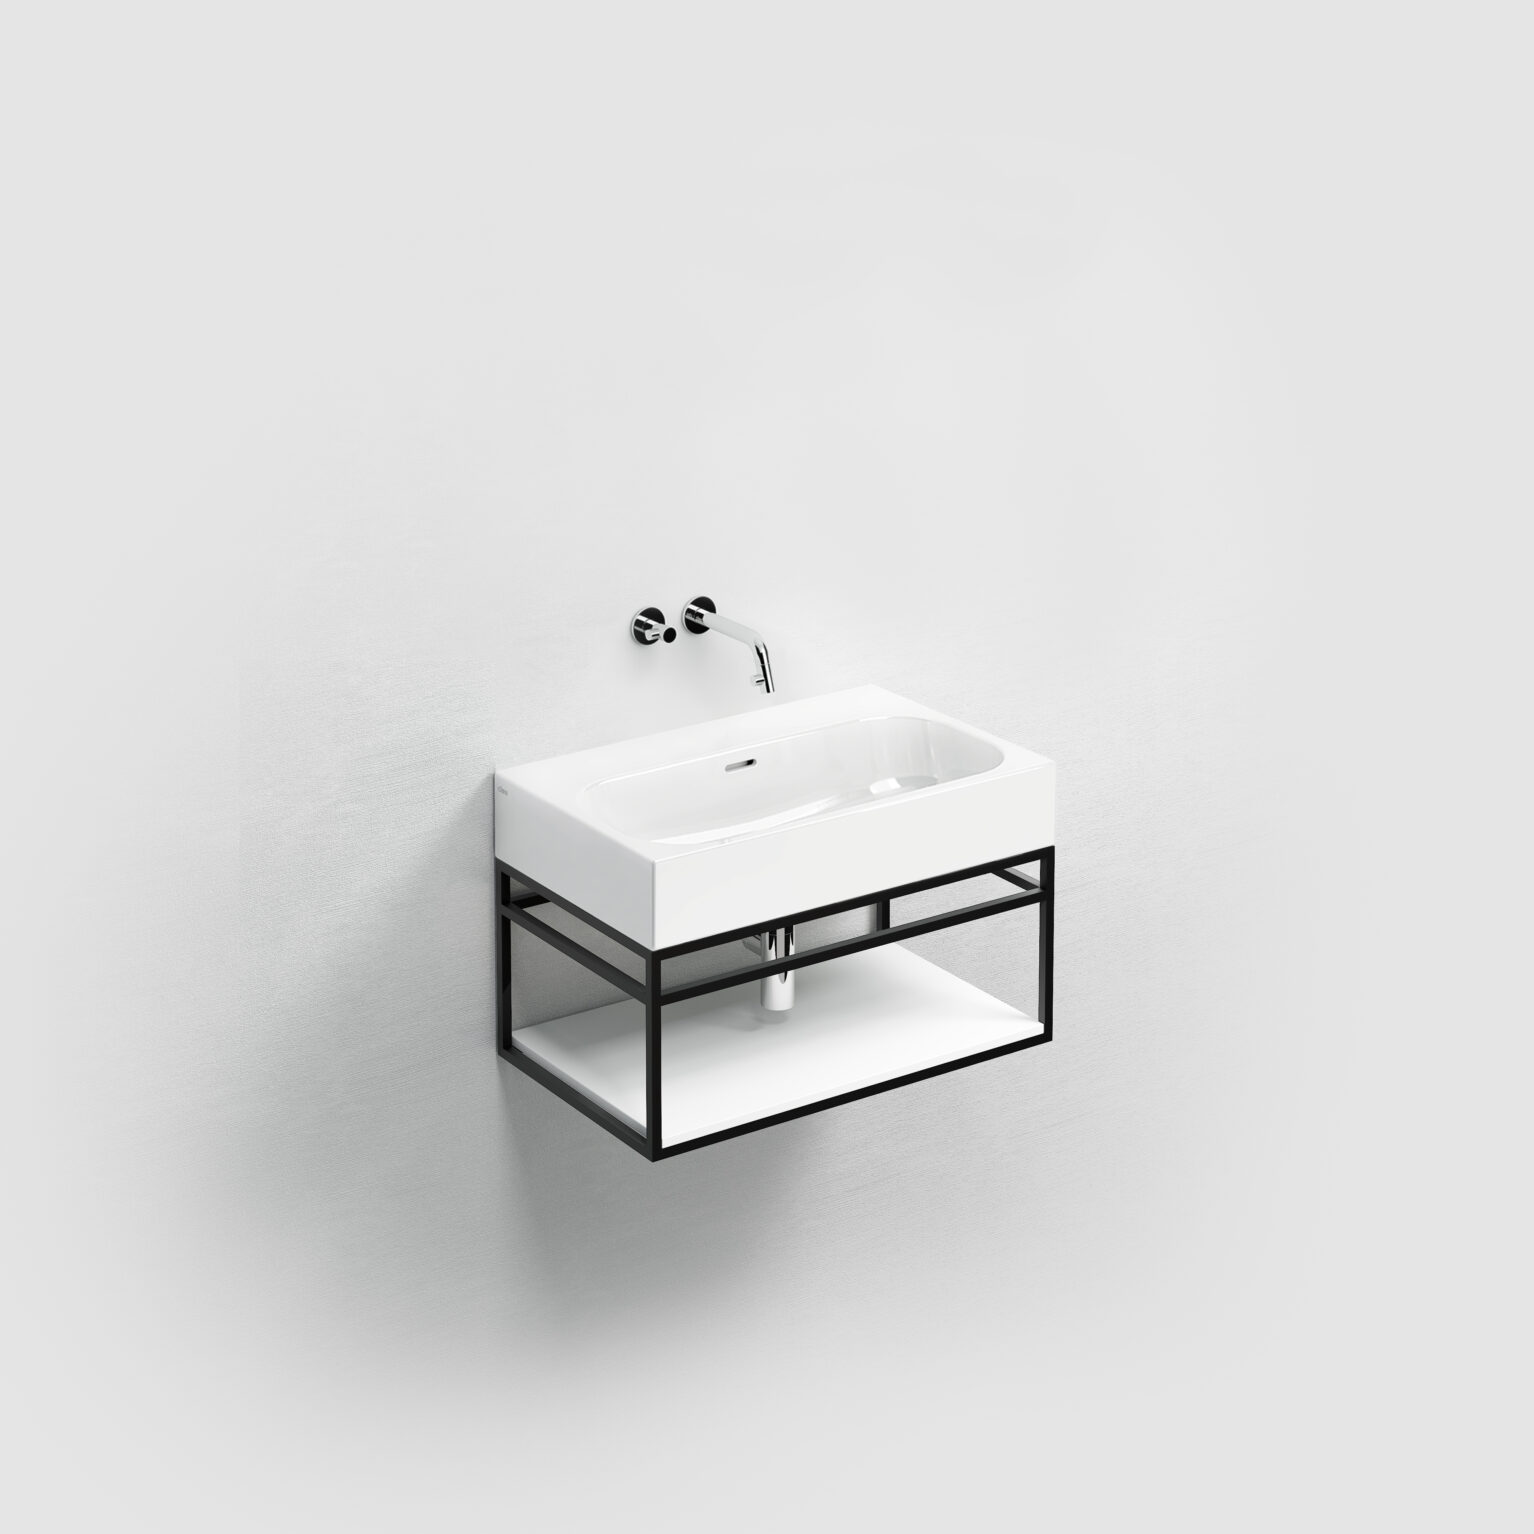 fontein-wastafel-wit-keramiek-toilet-badkamer-luxe-sanitair-First-MatchMe-clou-CL0201051-met-drie-voorbewerkte-kraangaten-CL020105101-70-cm-met-kraangat-frame-kast-planchet